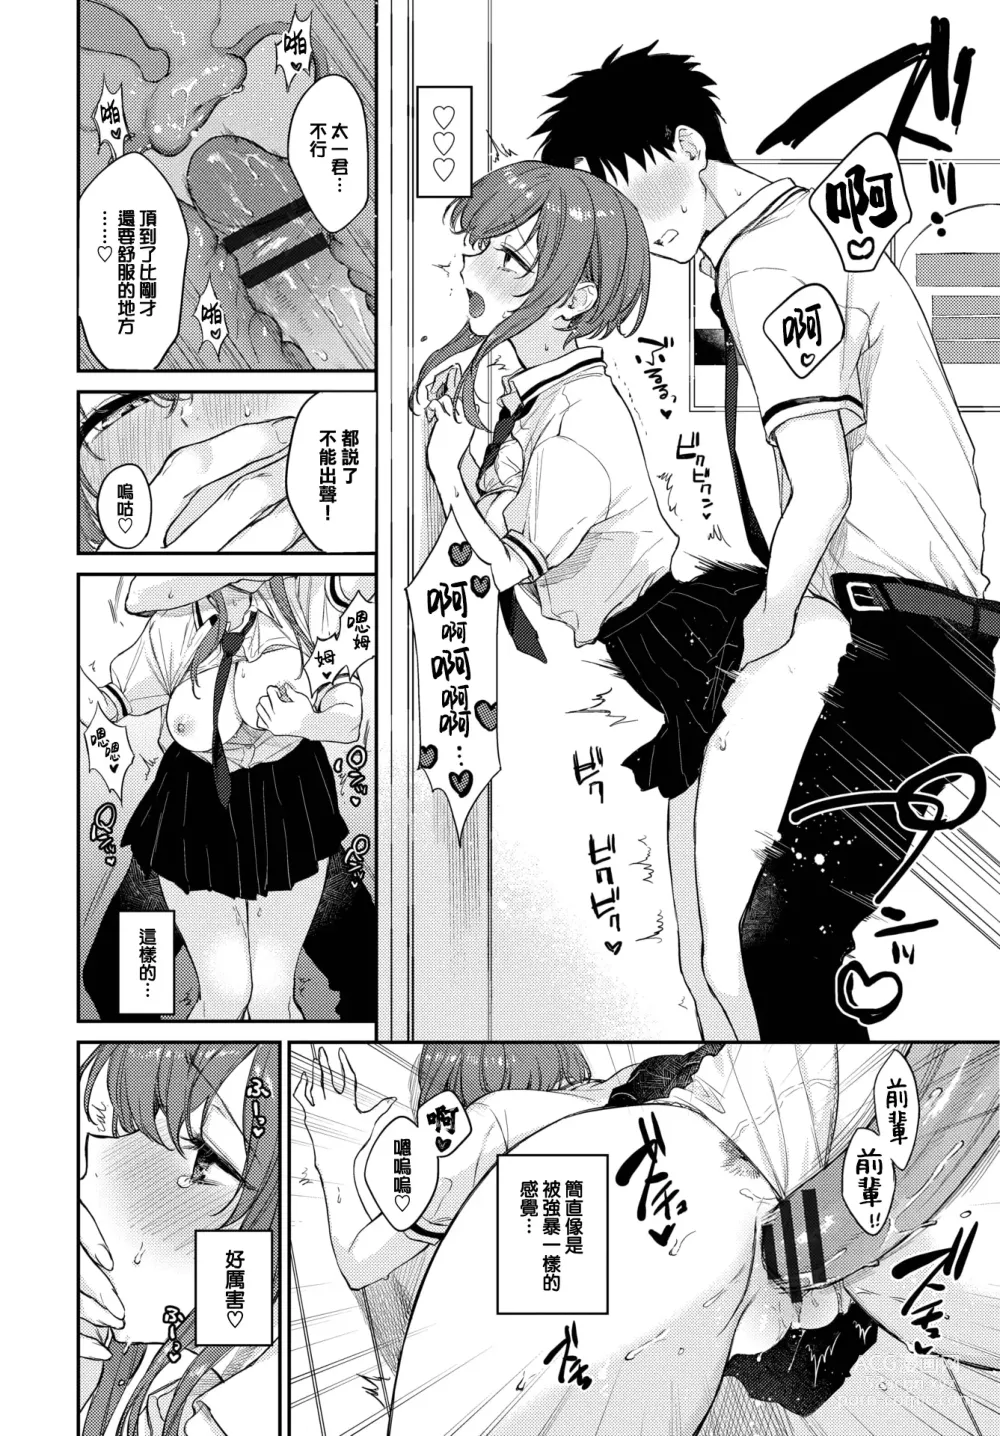 Page 209 of manga Muttsuri Bloom